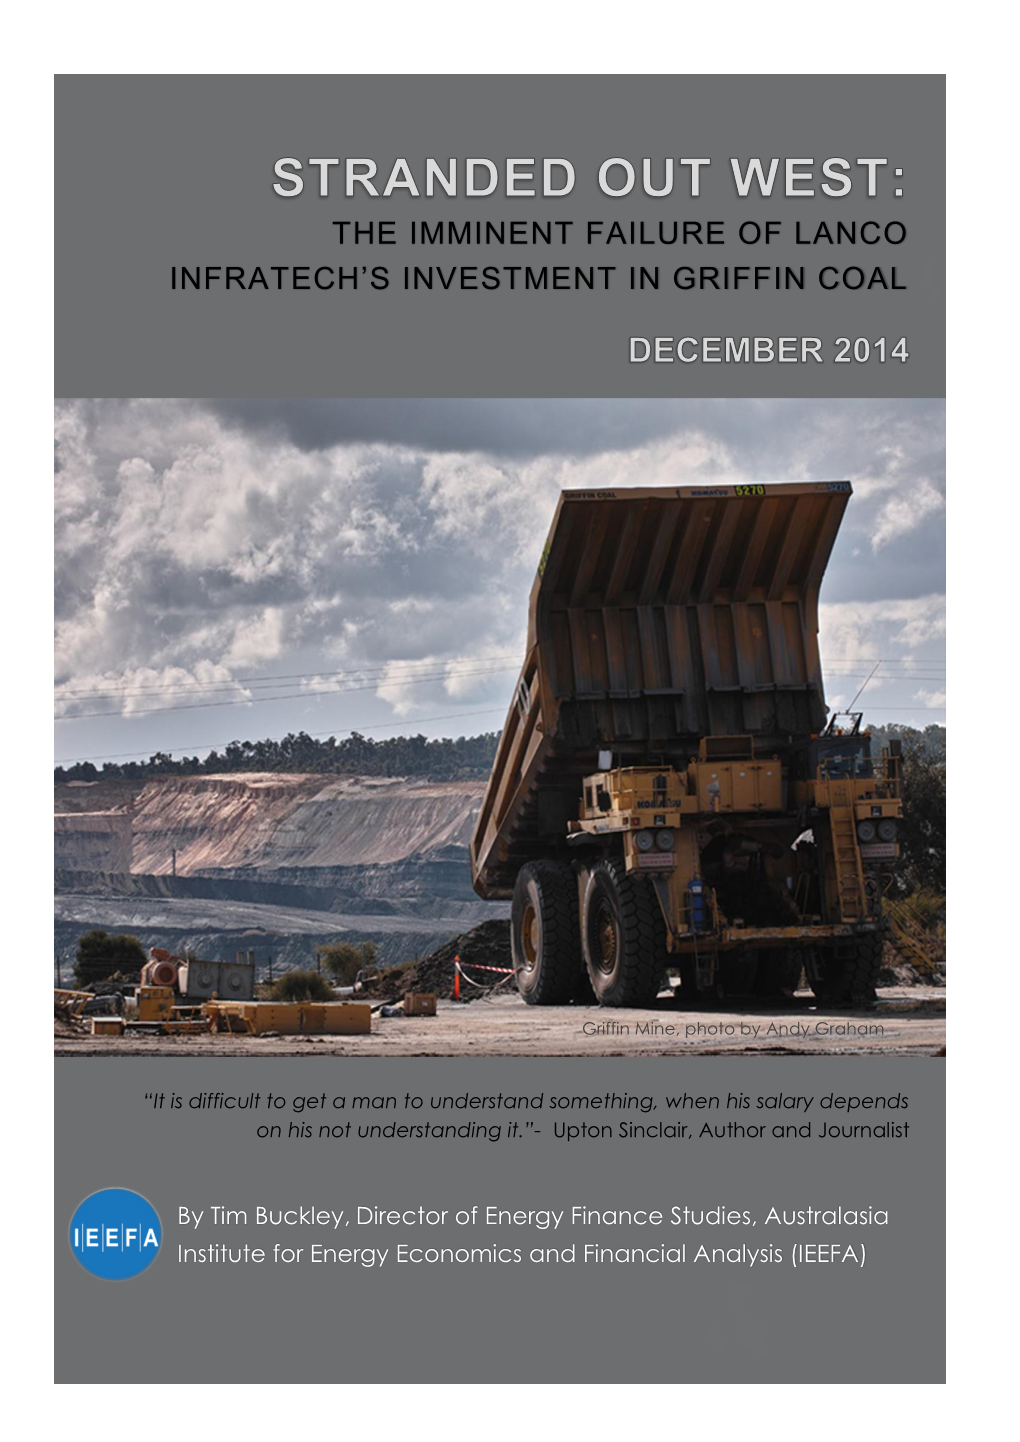 Griffin Coal